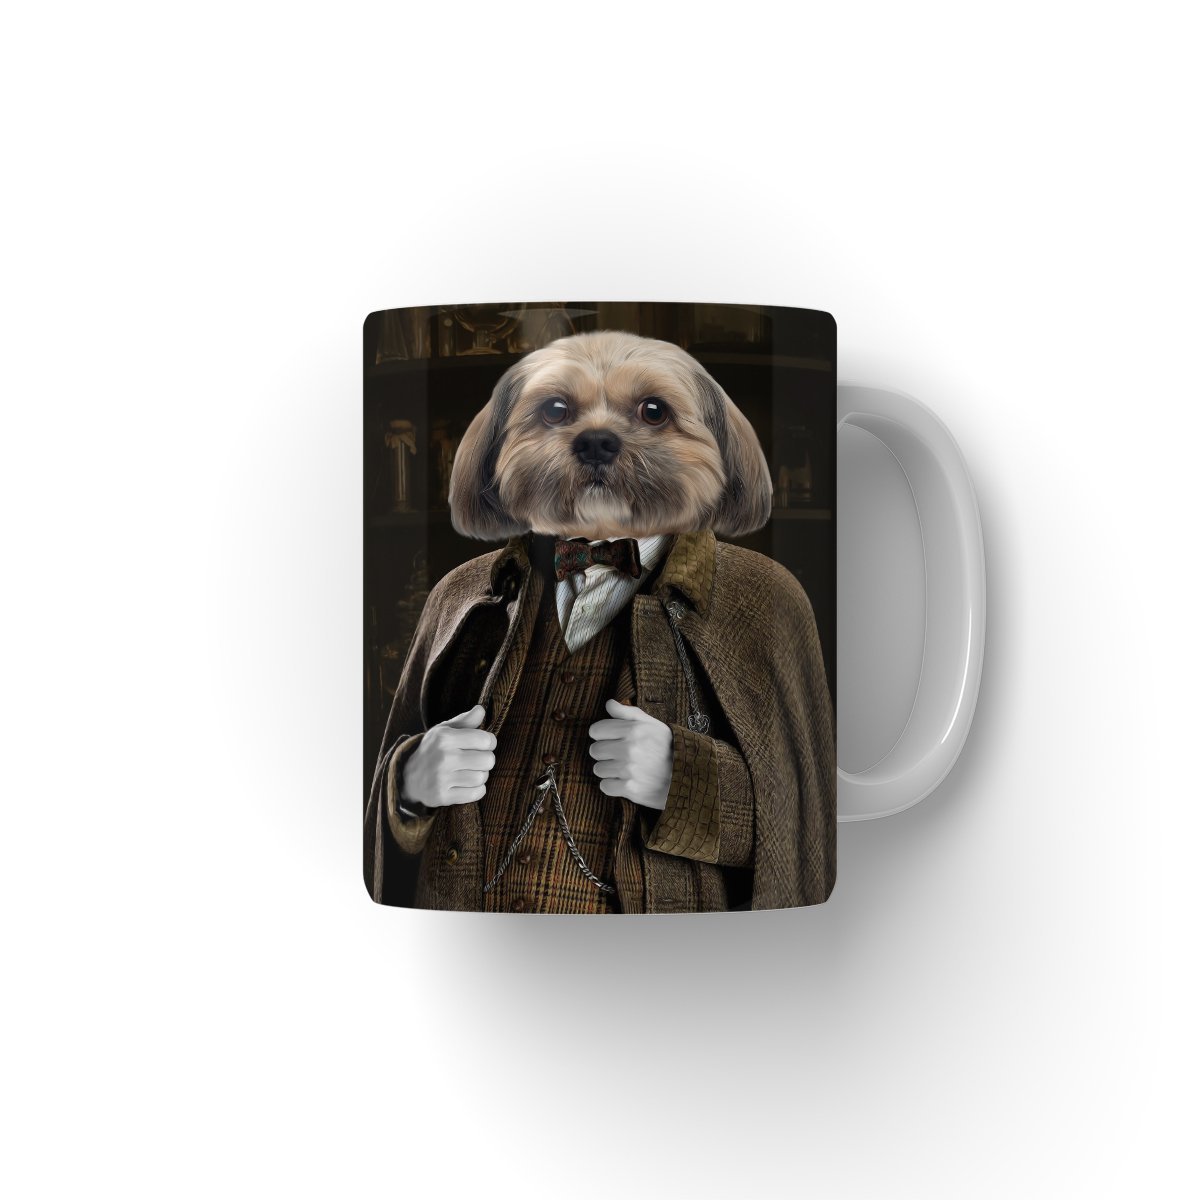 Professor Slughorn (Harry Potter Inspired): Custom Pet Mug - Paw & Glory - #pet portraits# - #dog portraits# - #pet portraits uk#paw & glory, custom pet portrait Mug,dog travel mug, coffee mugs gift, custom designed mugs, picture of mugs, pet mug